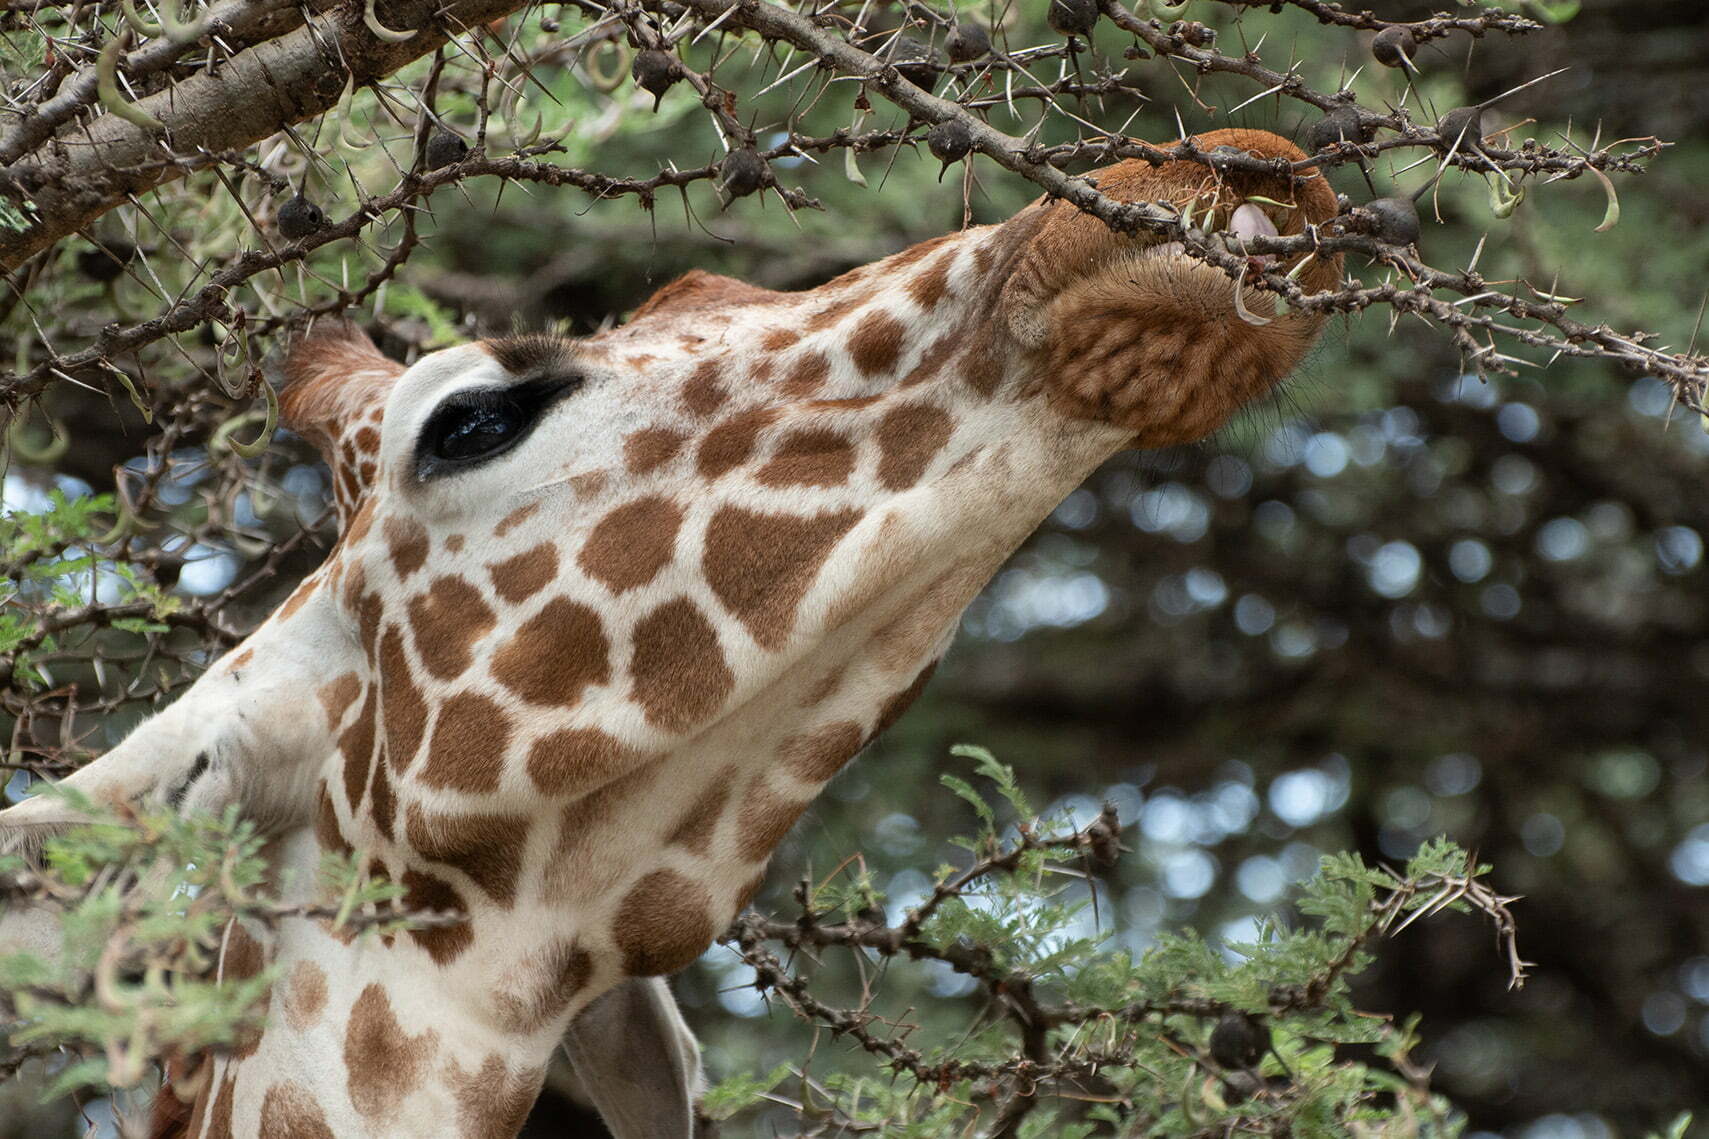 A Giraffe eating from an Acacia tree in Ol Pejeta National Park. 